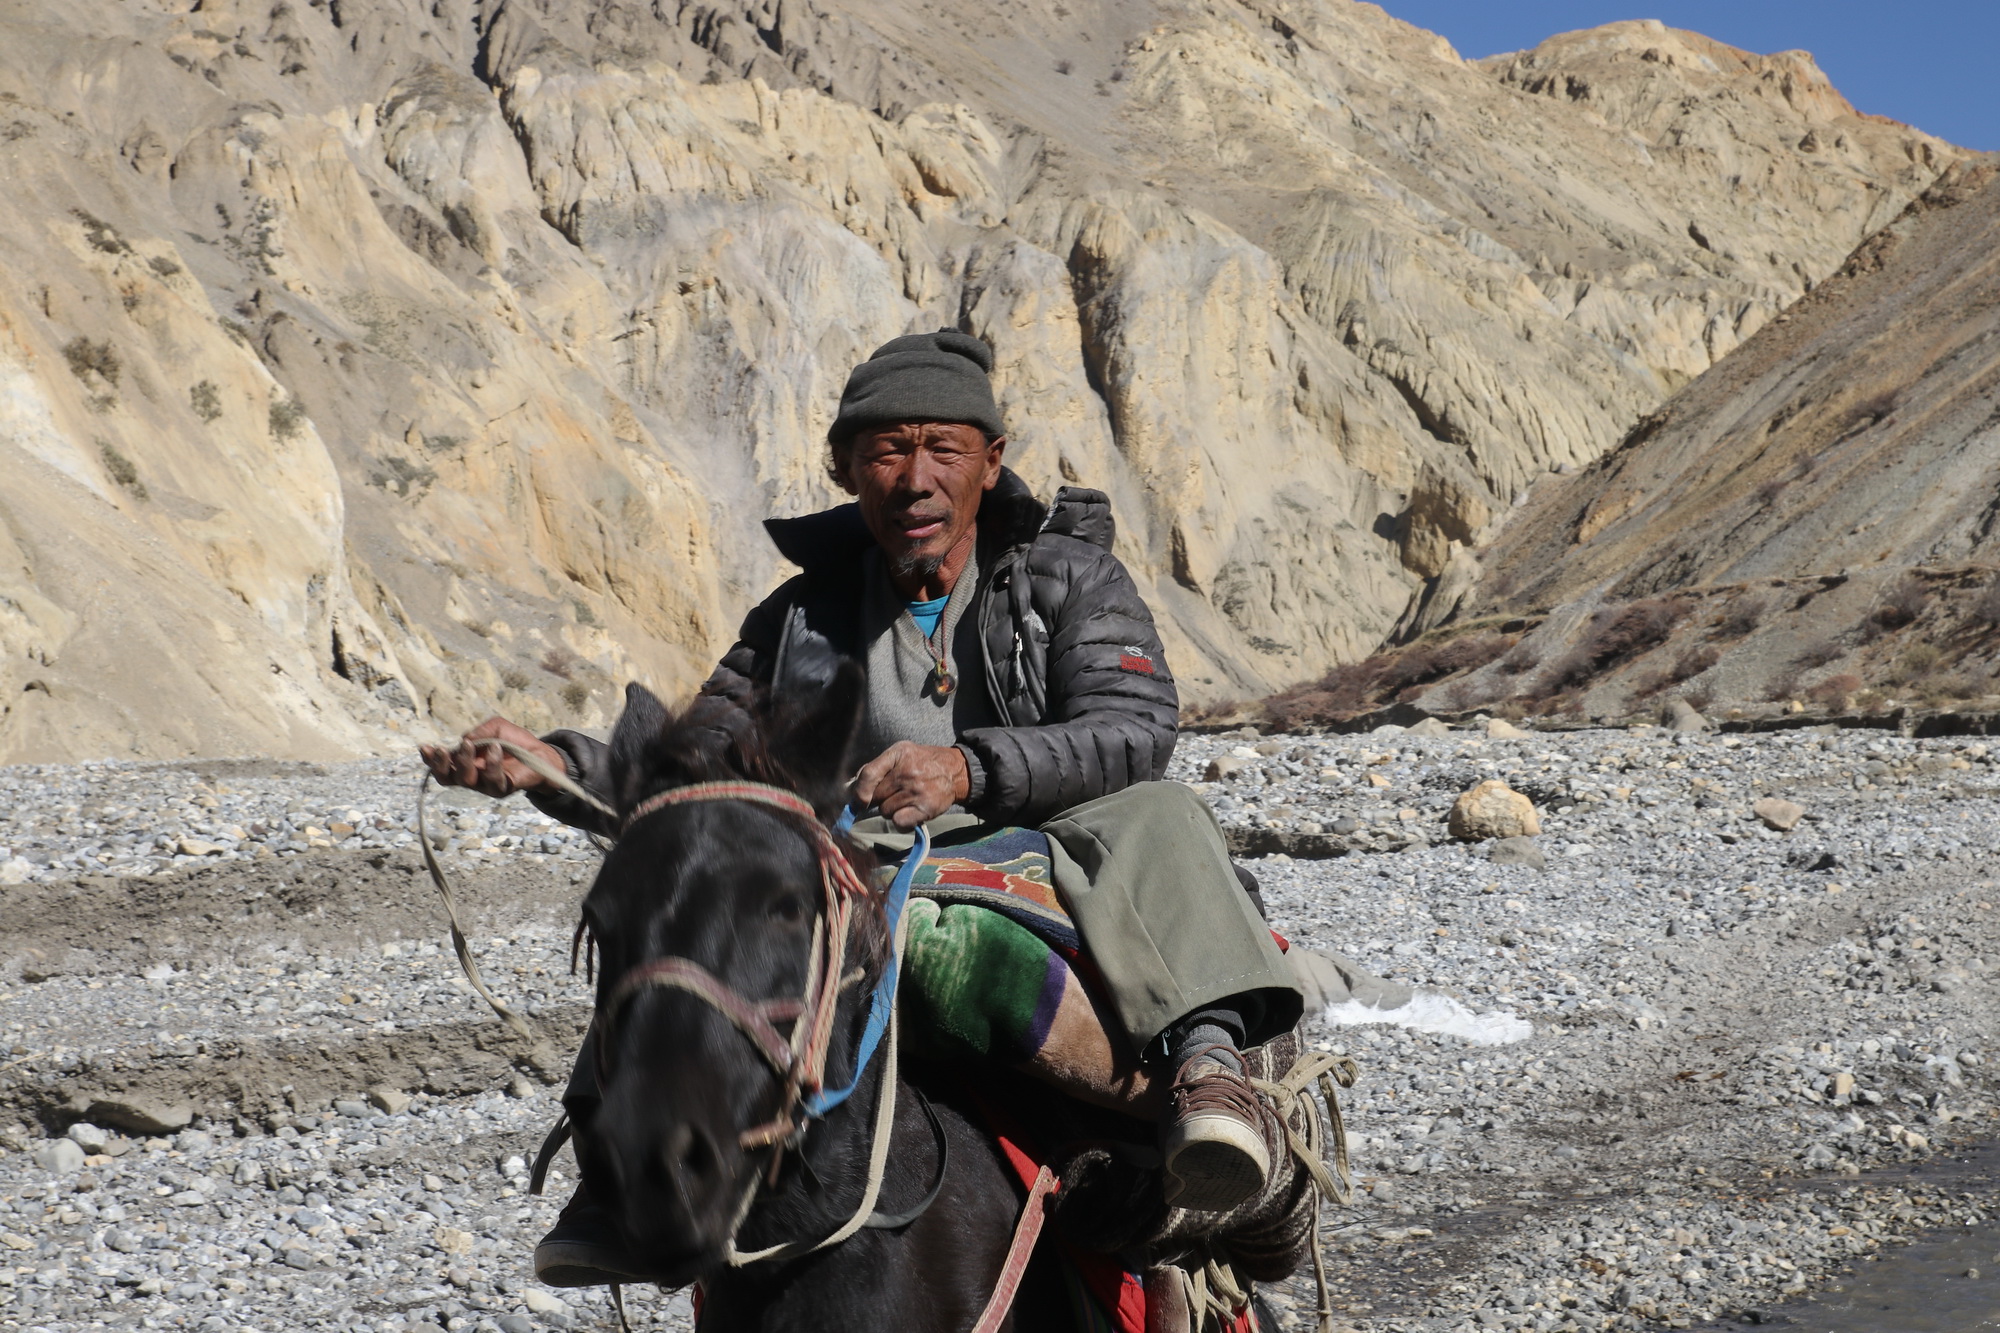 Upper Mustang horseman on the way to Yara